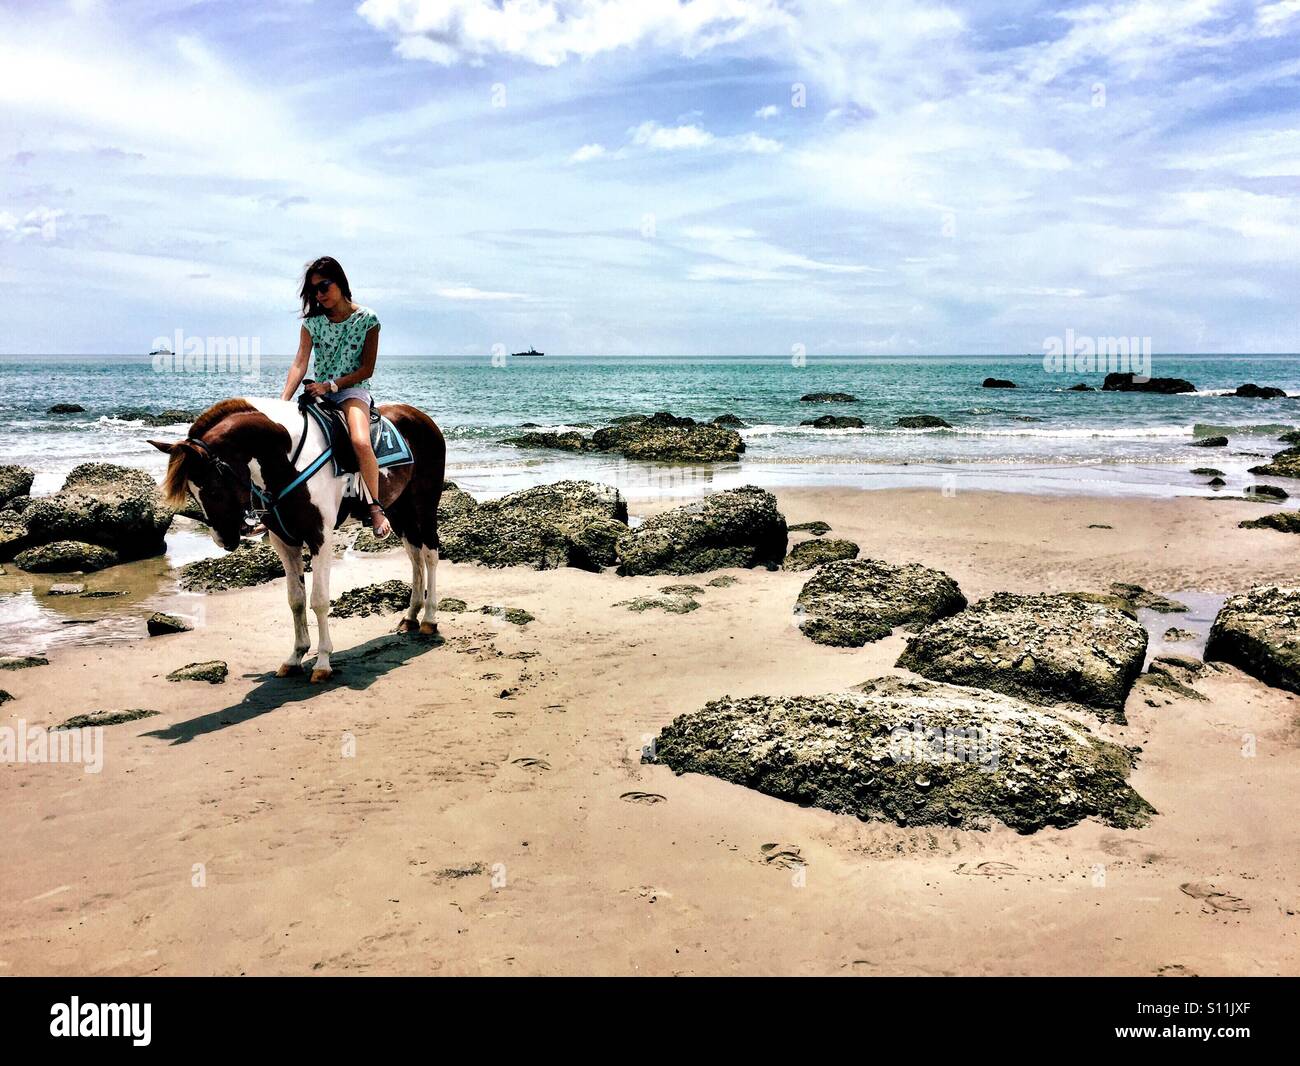 Horse back riding at Huahin Beach, Thailand. Stock Photo